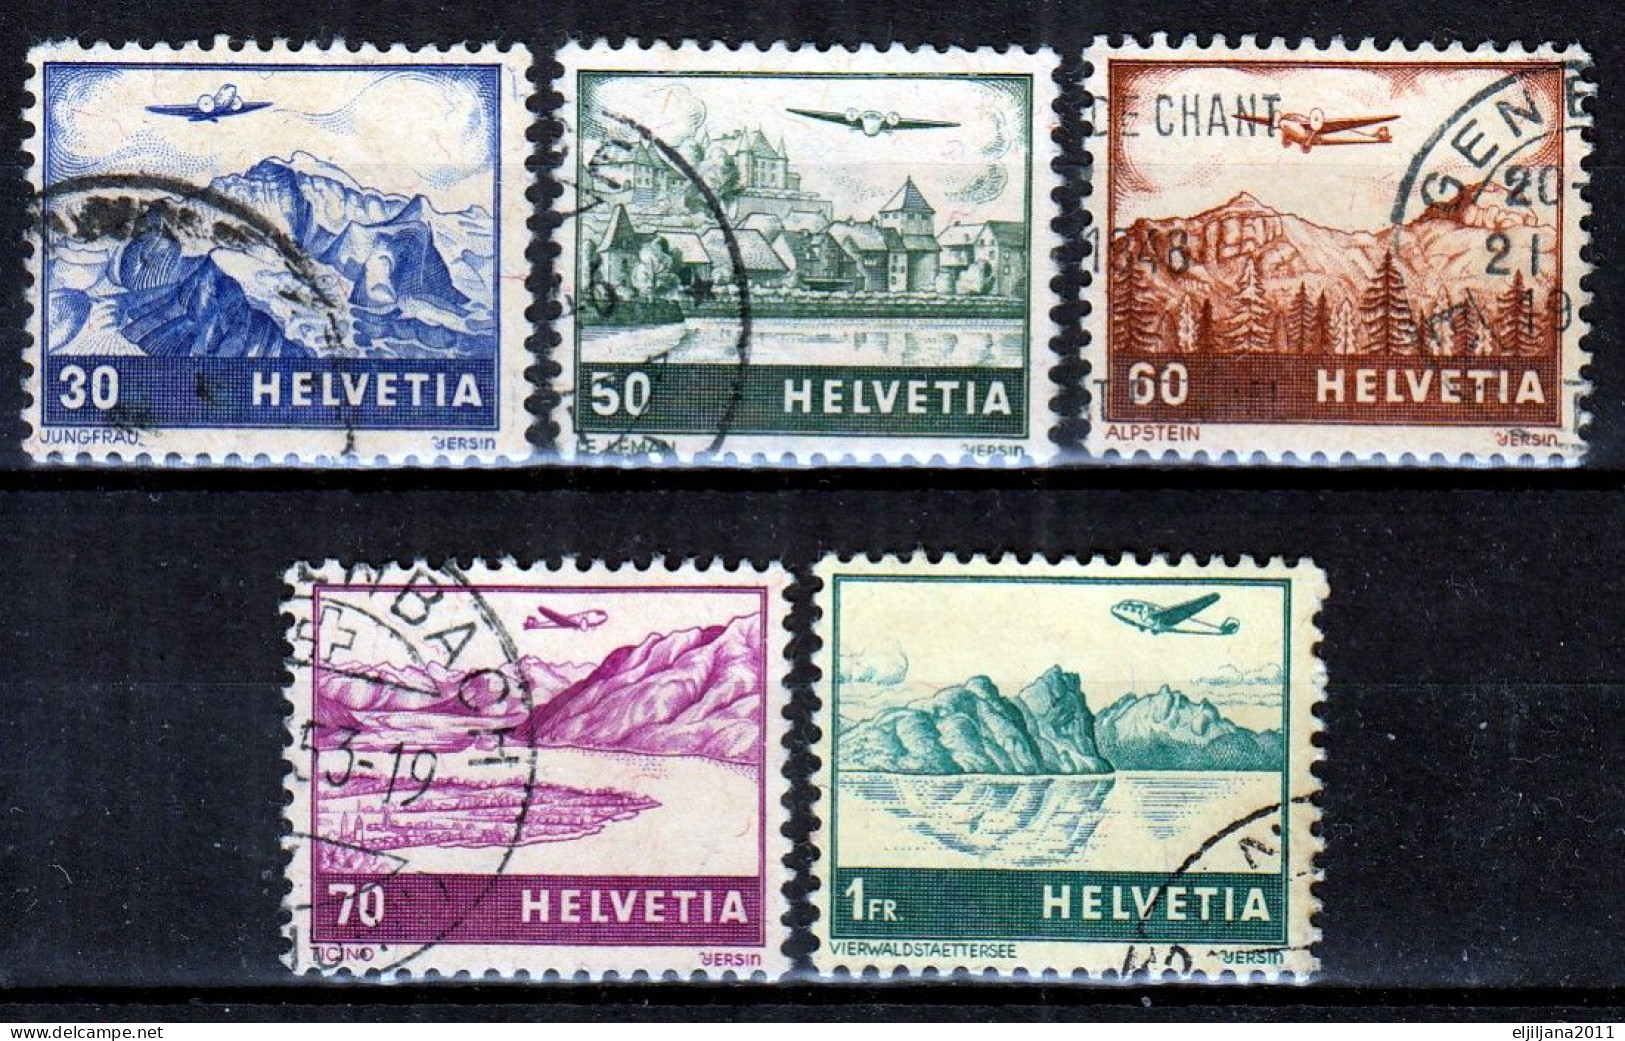 Switzerland / Helvetia / Schweiz / Suisse 1941 ⁕ Airmail / Flugzeug über Landschaften ⁕ 5v Used - Gebruikt